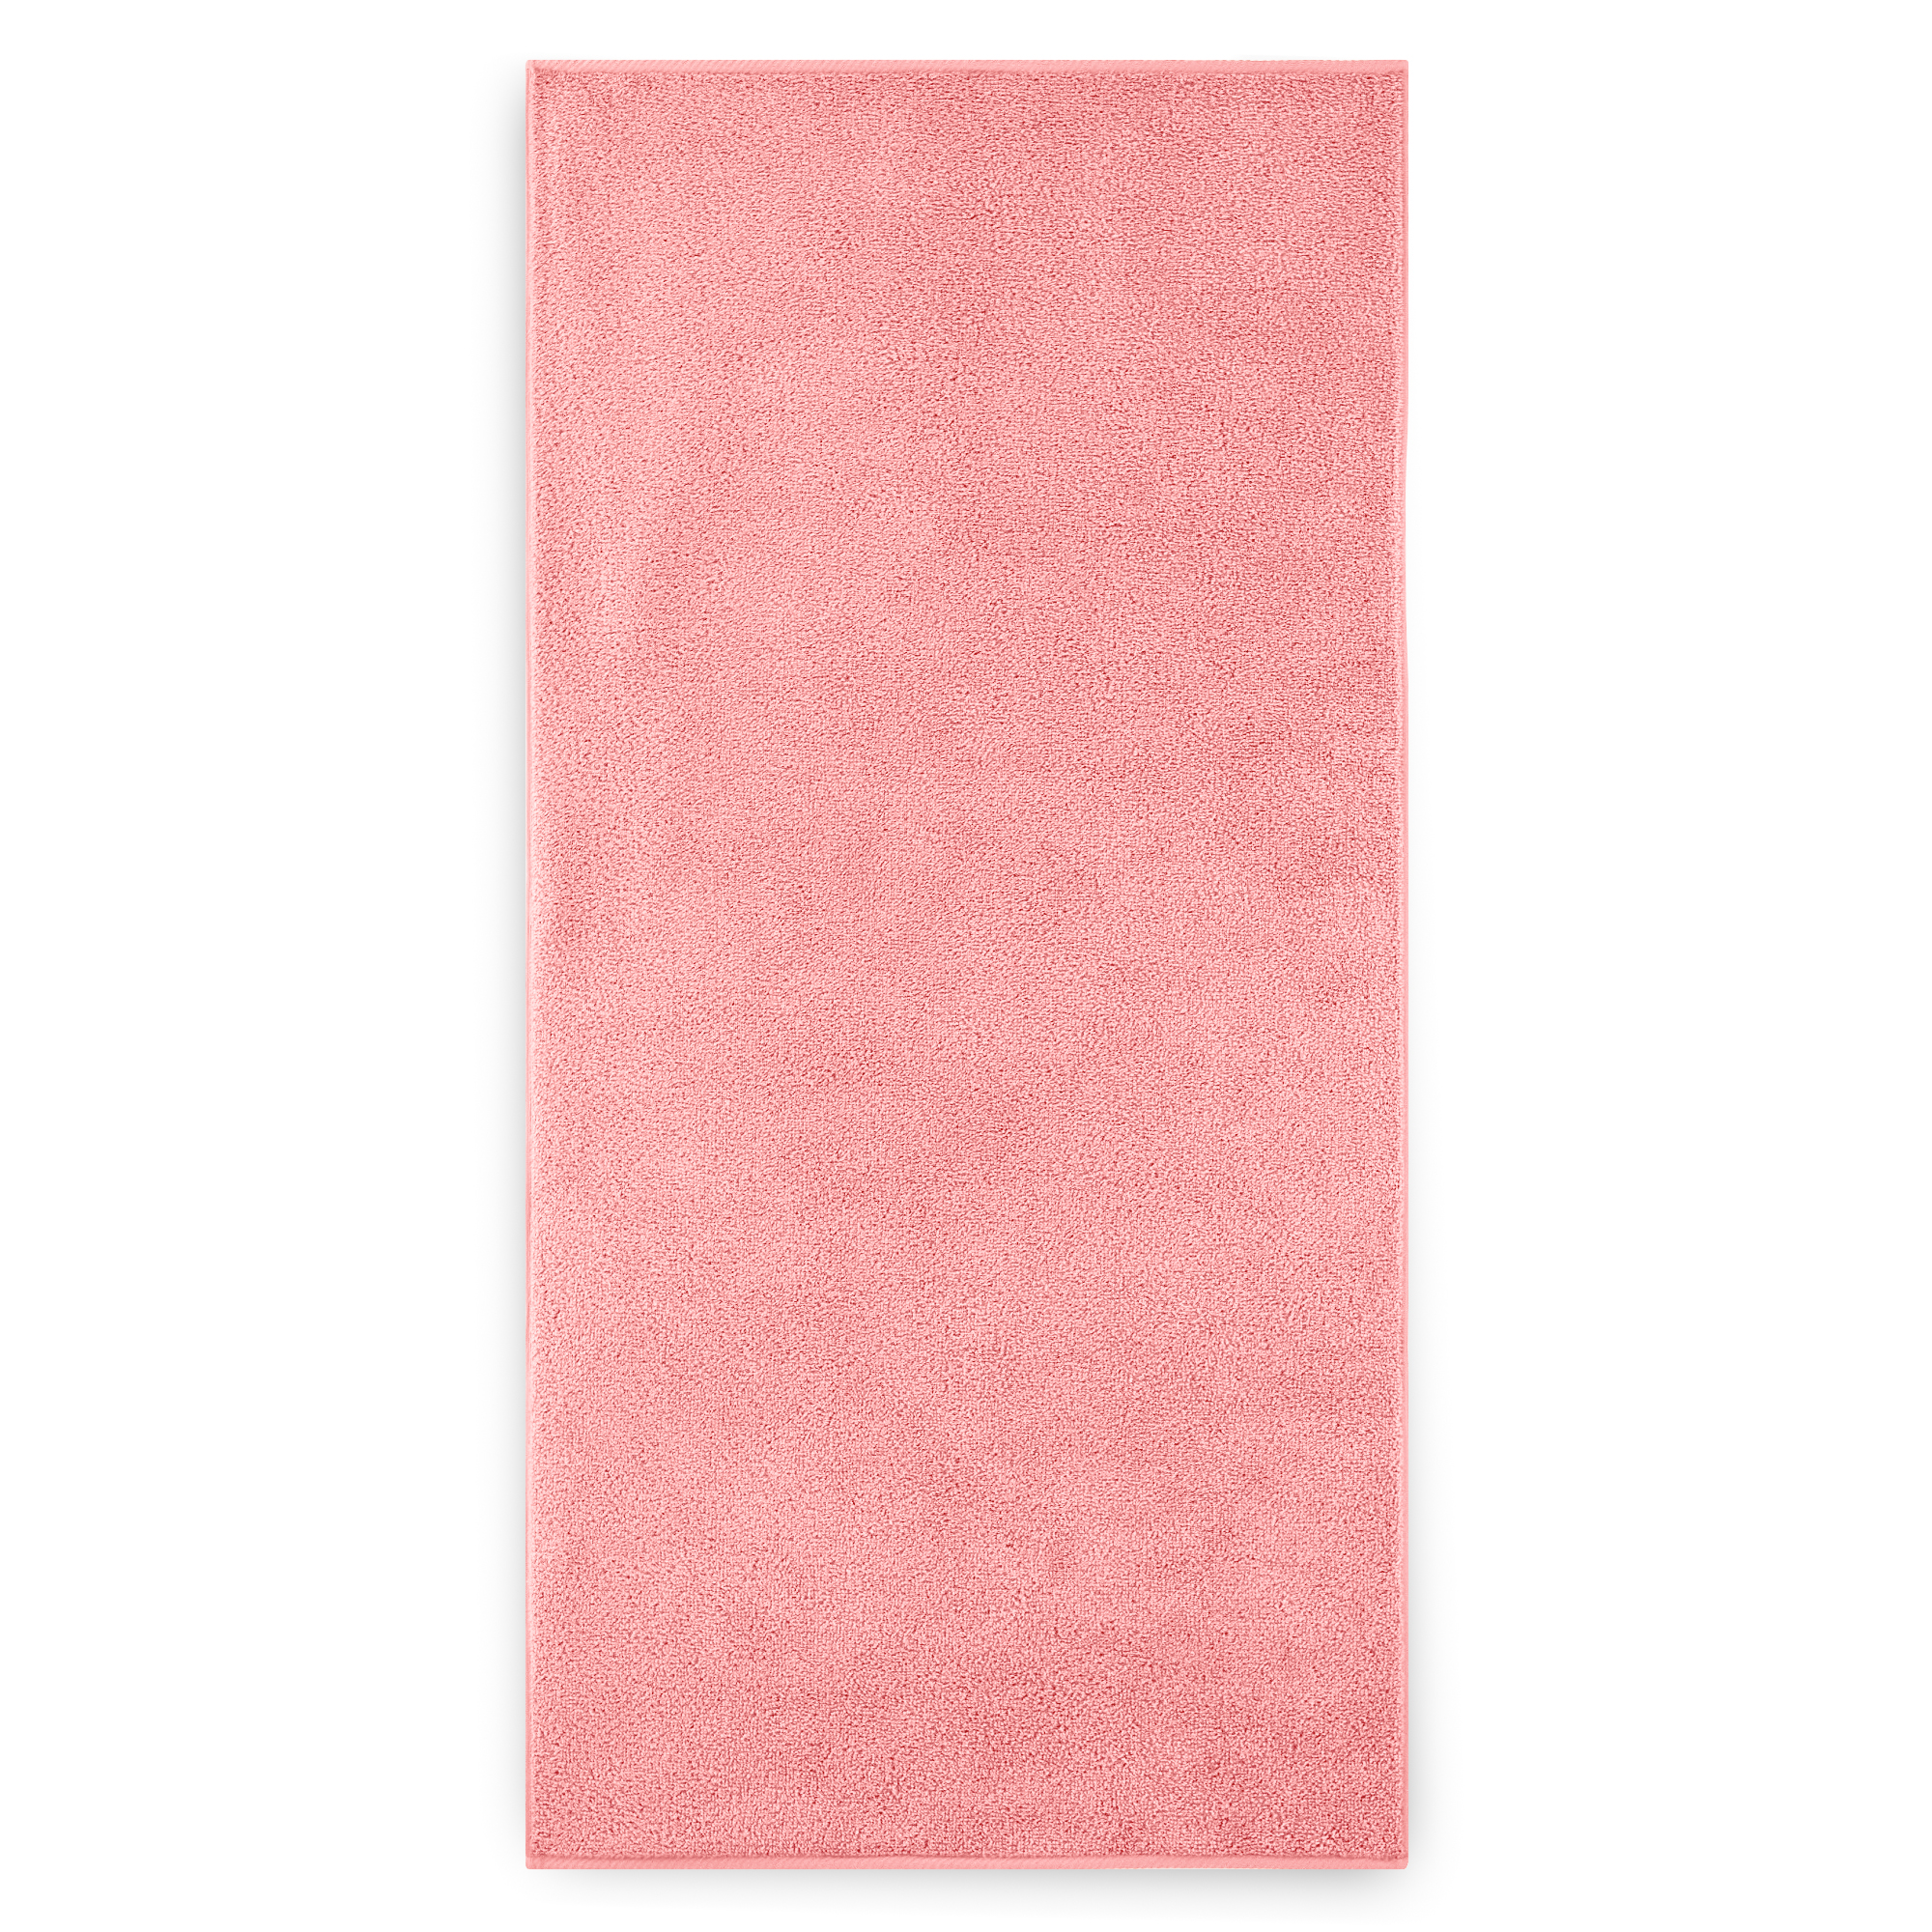 Levně Zwoltex Unisex's Towel Kiwi 2